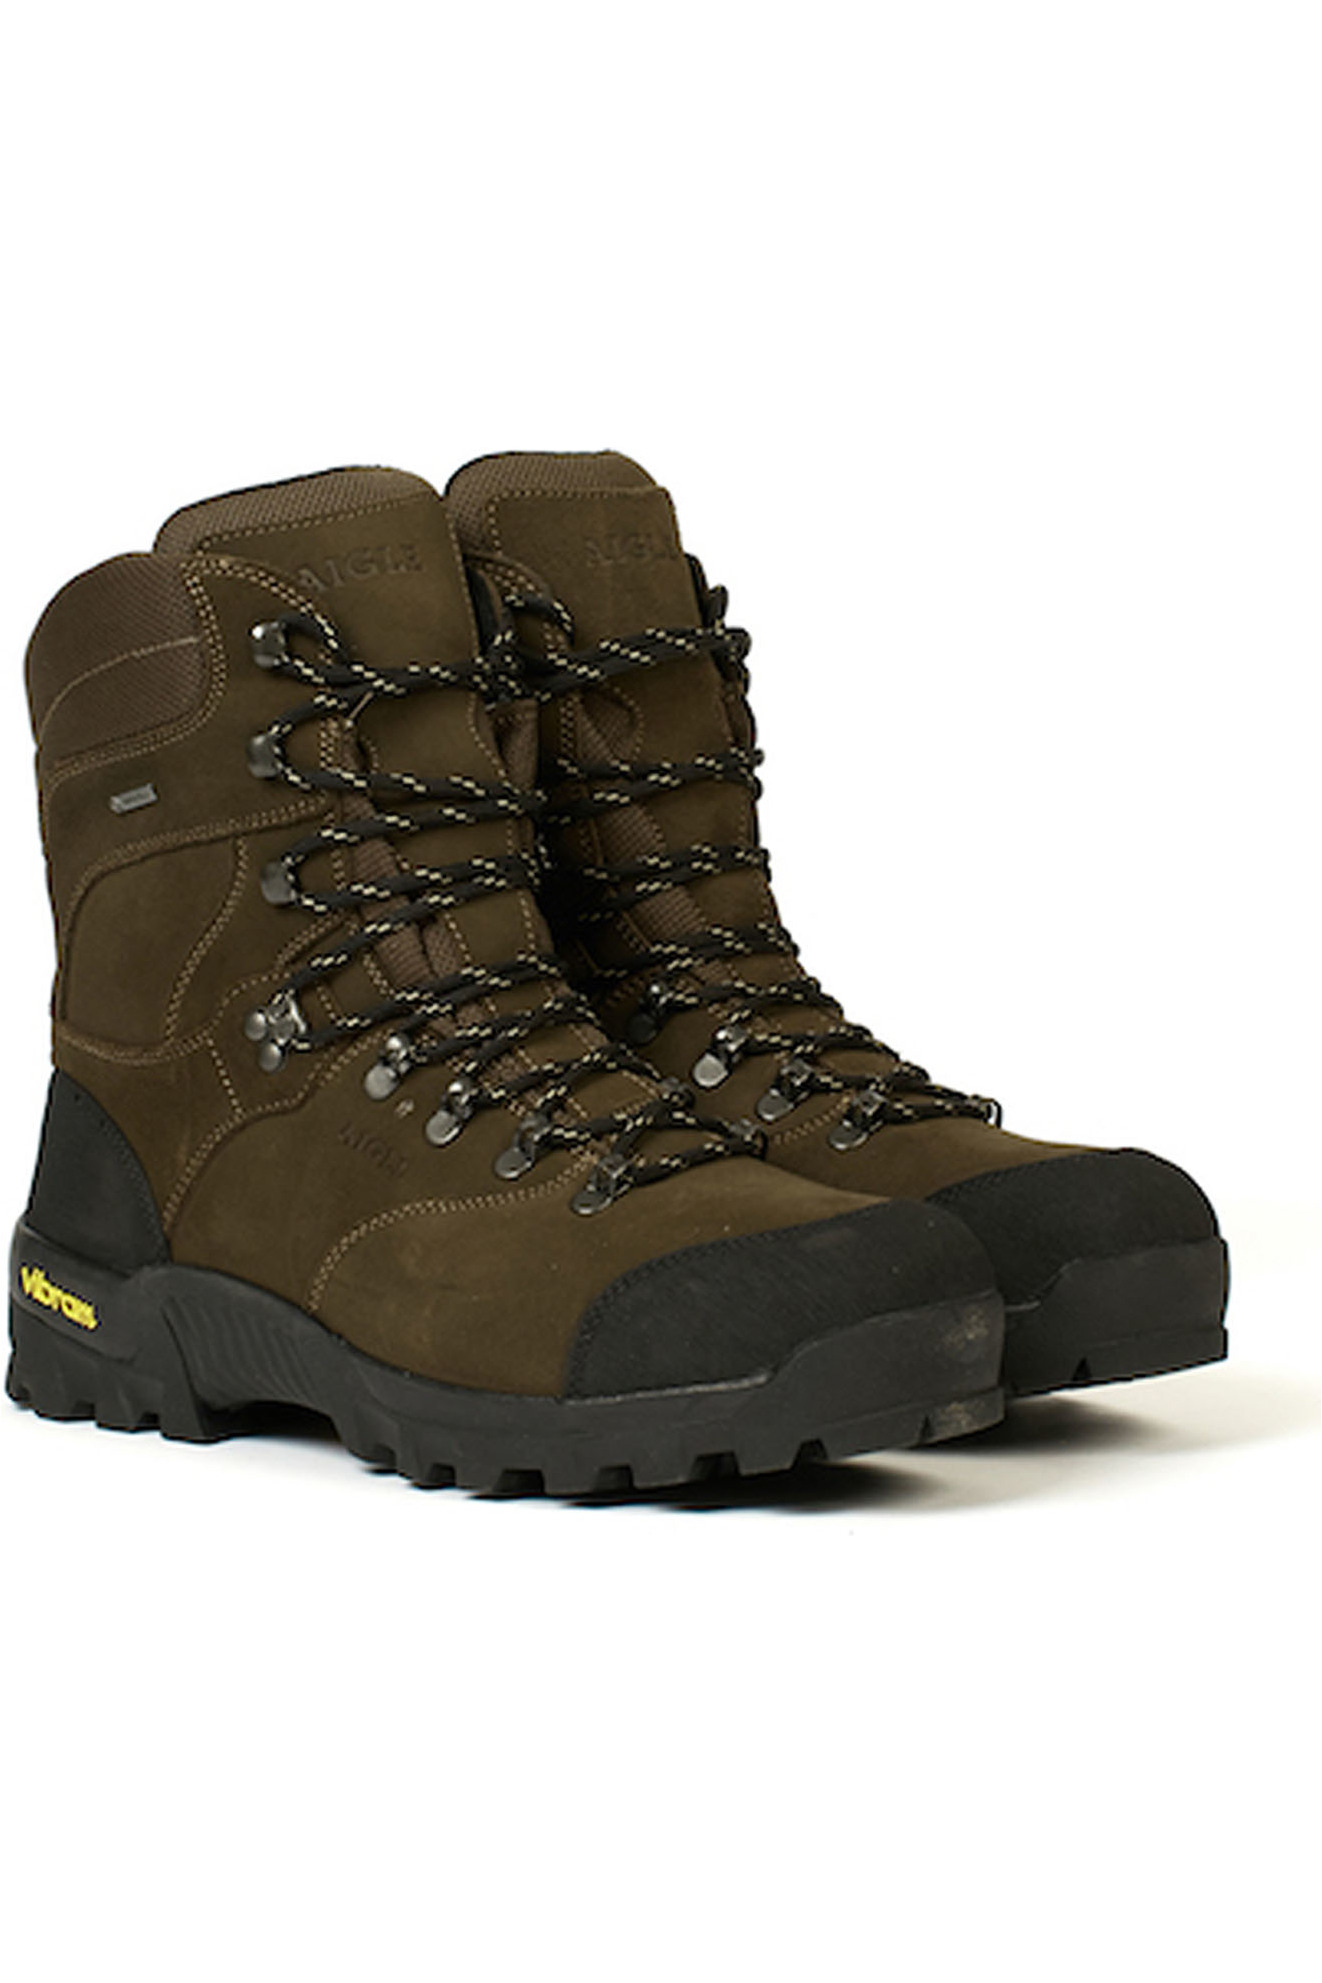 Aigle Altavio Hi Gortex Boots - Sepia - Mens - Footwear - Paddock | The Drillshed